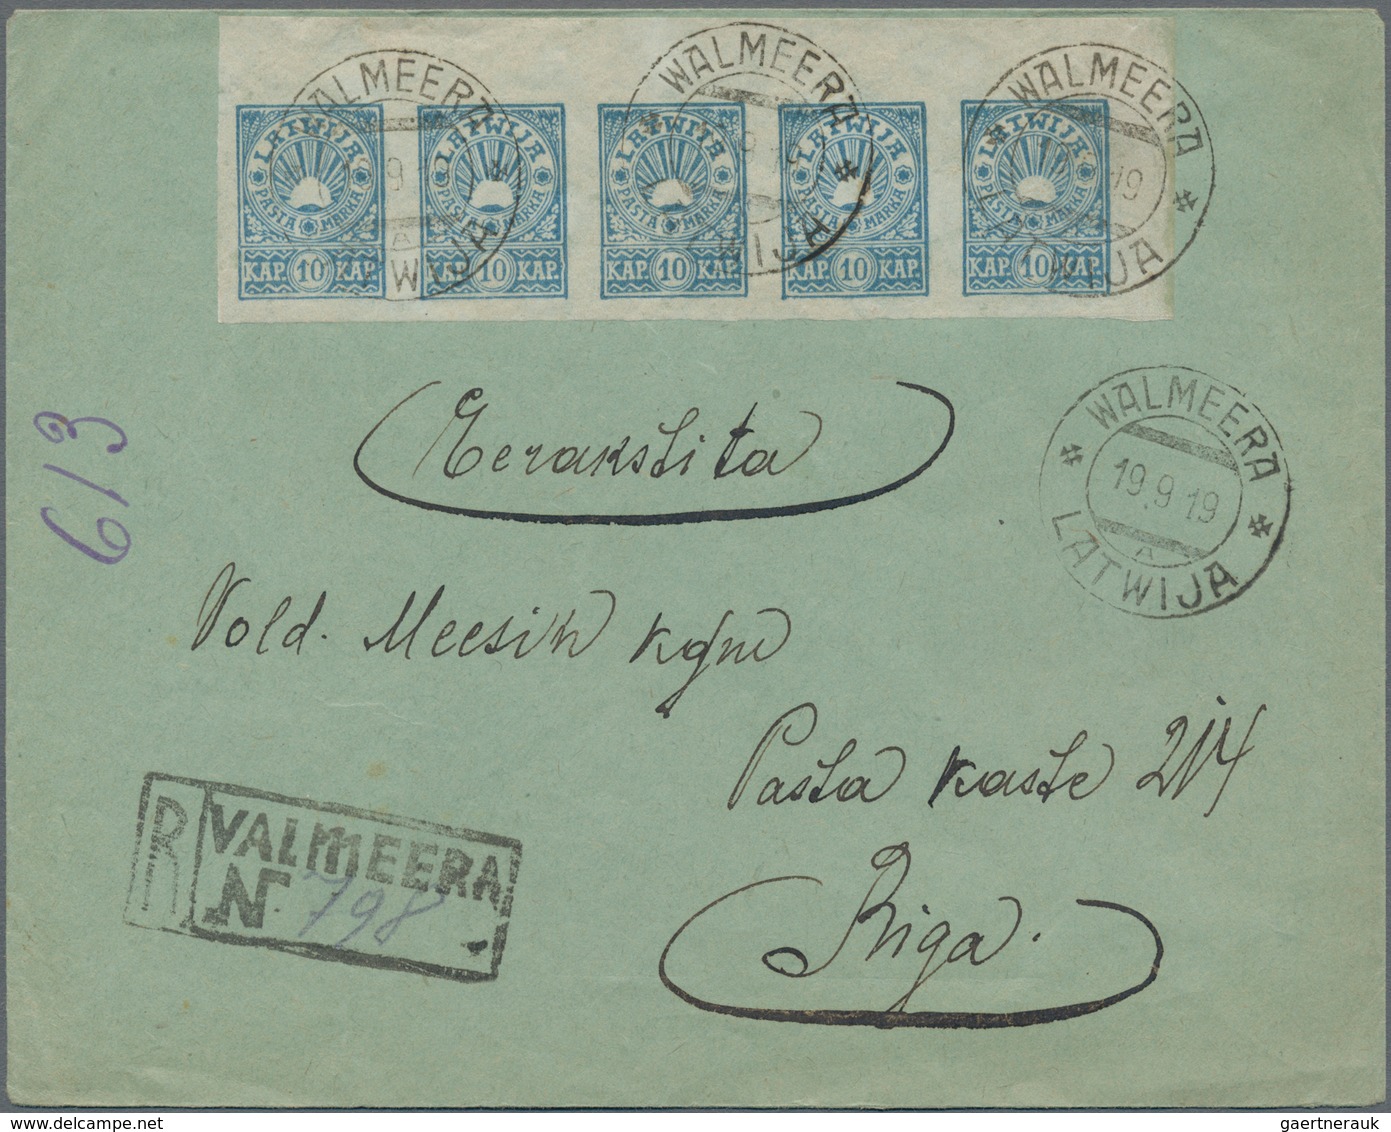 Lettland: 1919, Registered Letter From "WALMEERA 19 9 19" Franked With 10 K. Definitive Strip Of Fiv - Letland